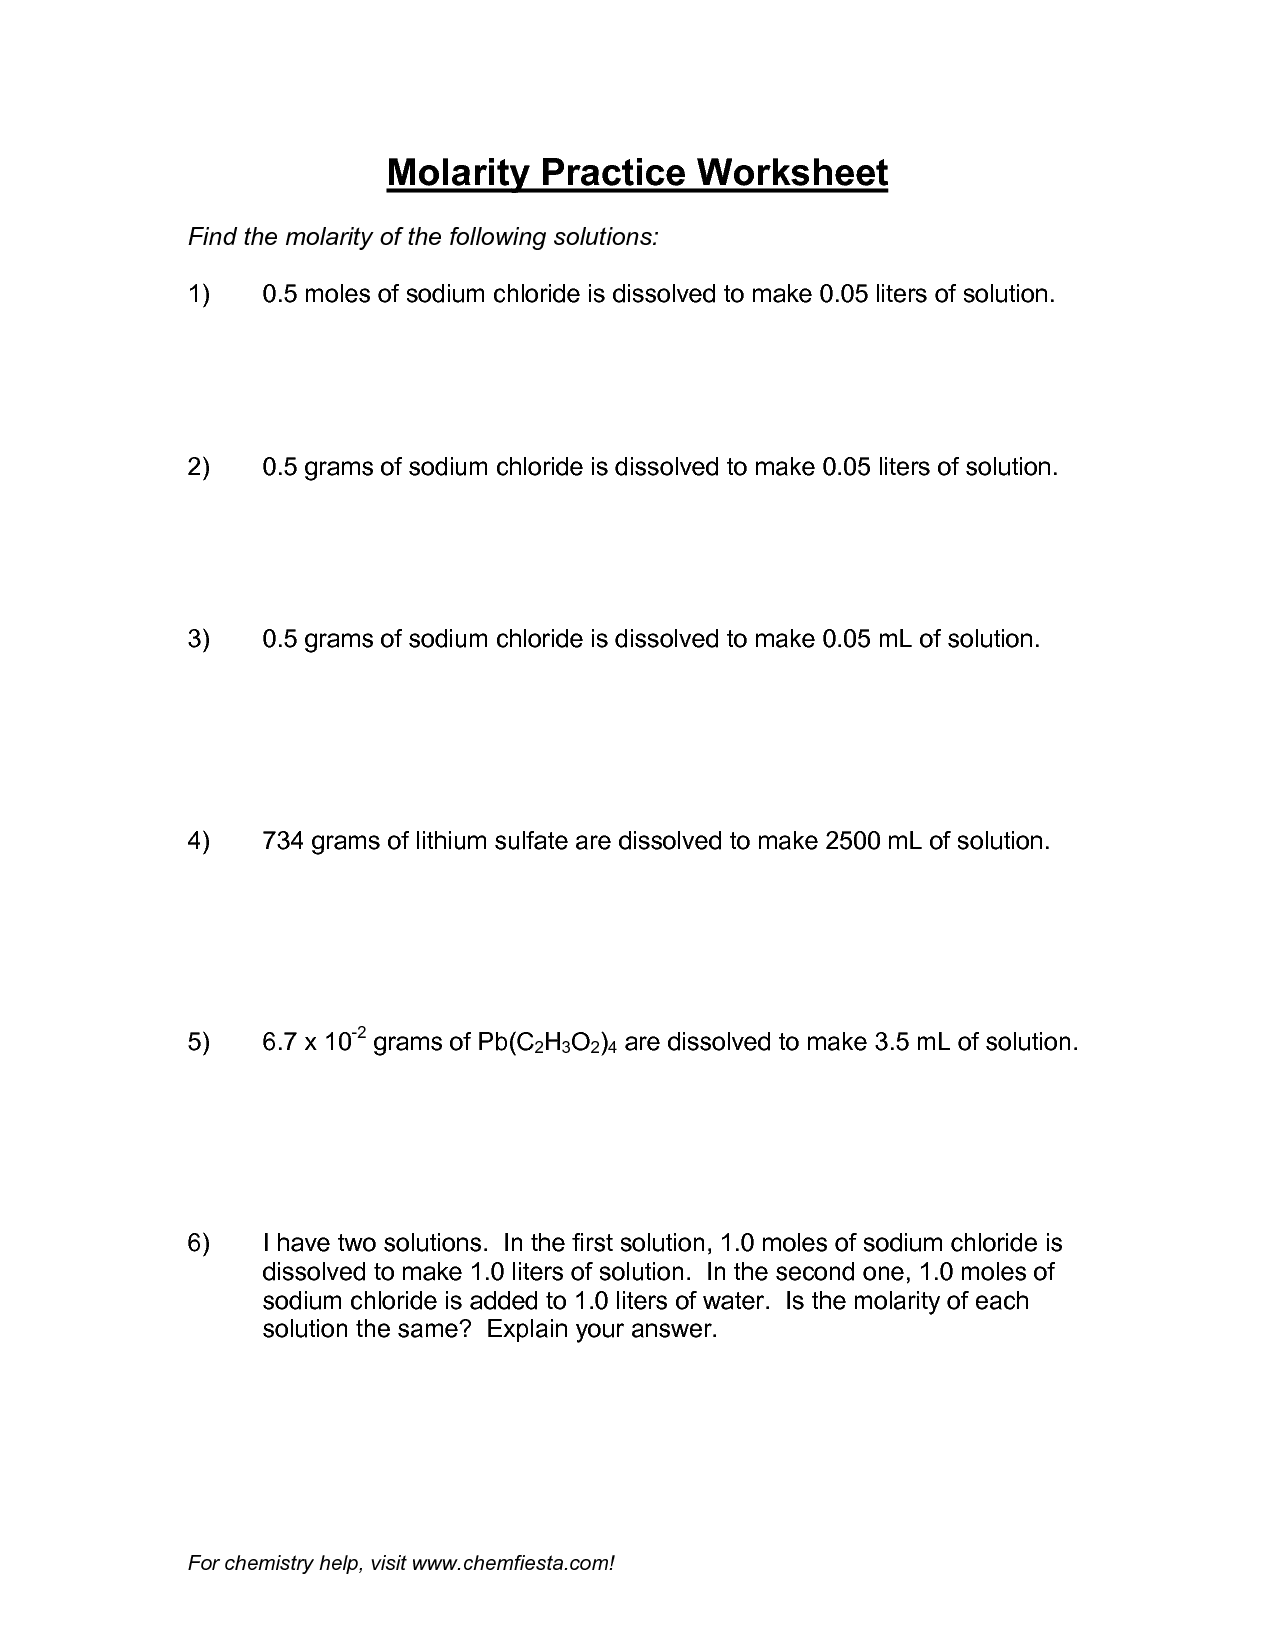 Molarity Practice Worksheet Answers Image